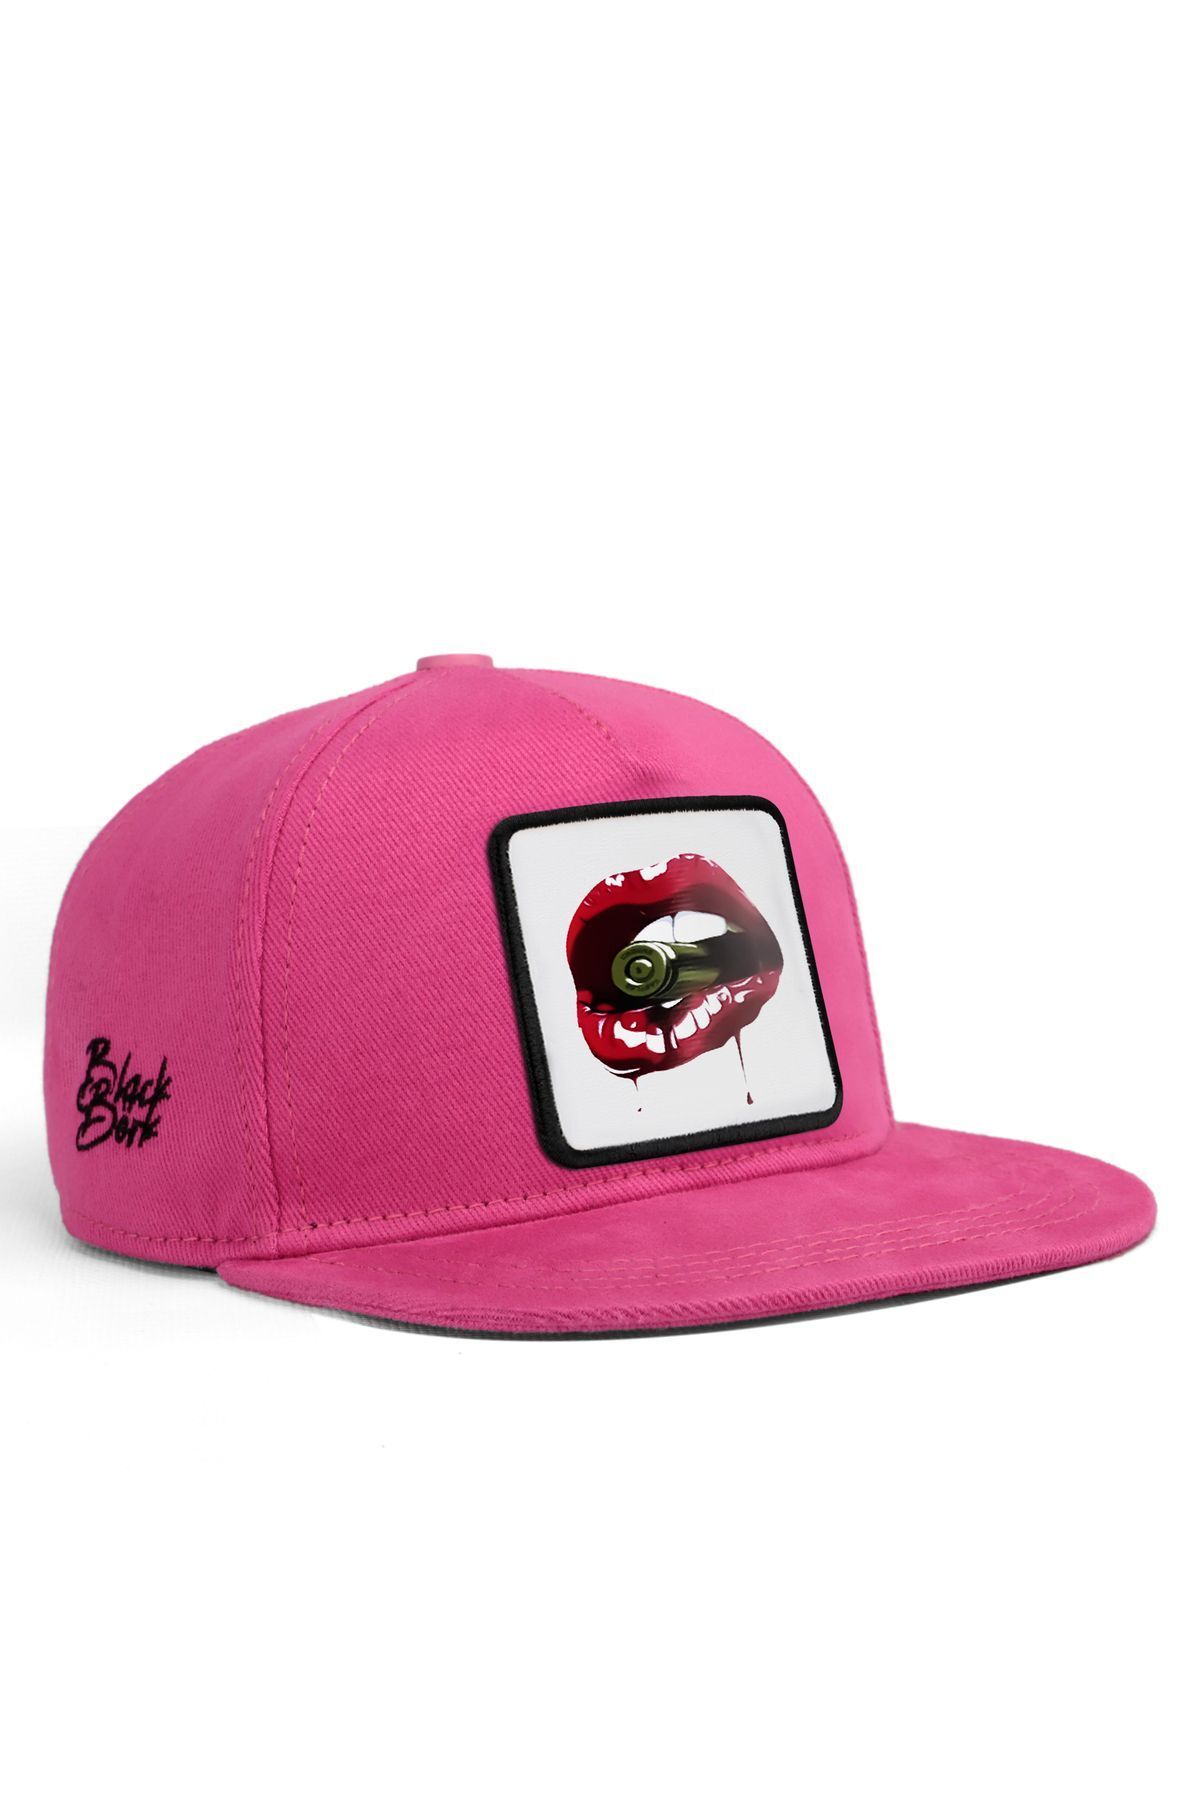 BlackBörk V1 Hip Hop Kids Dudak - 3bs Kod Logolu Unisex Pembe Çocuk Şapka (CAP)